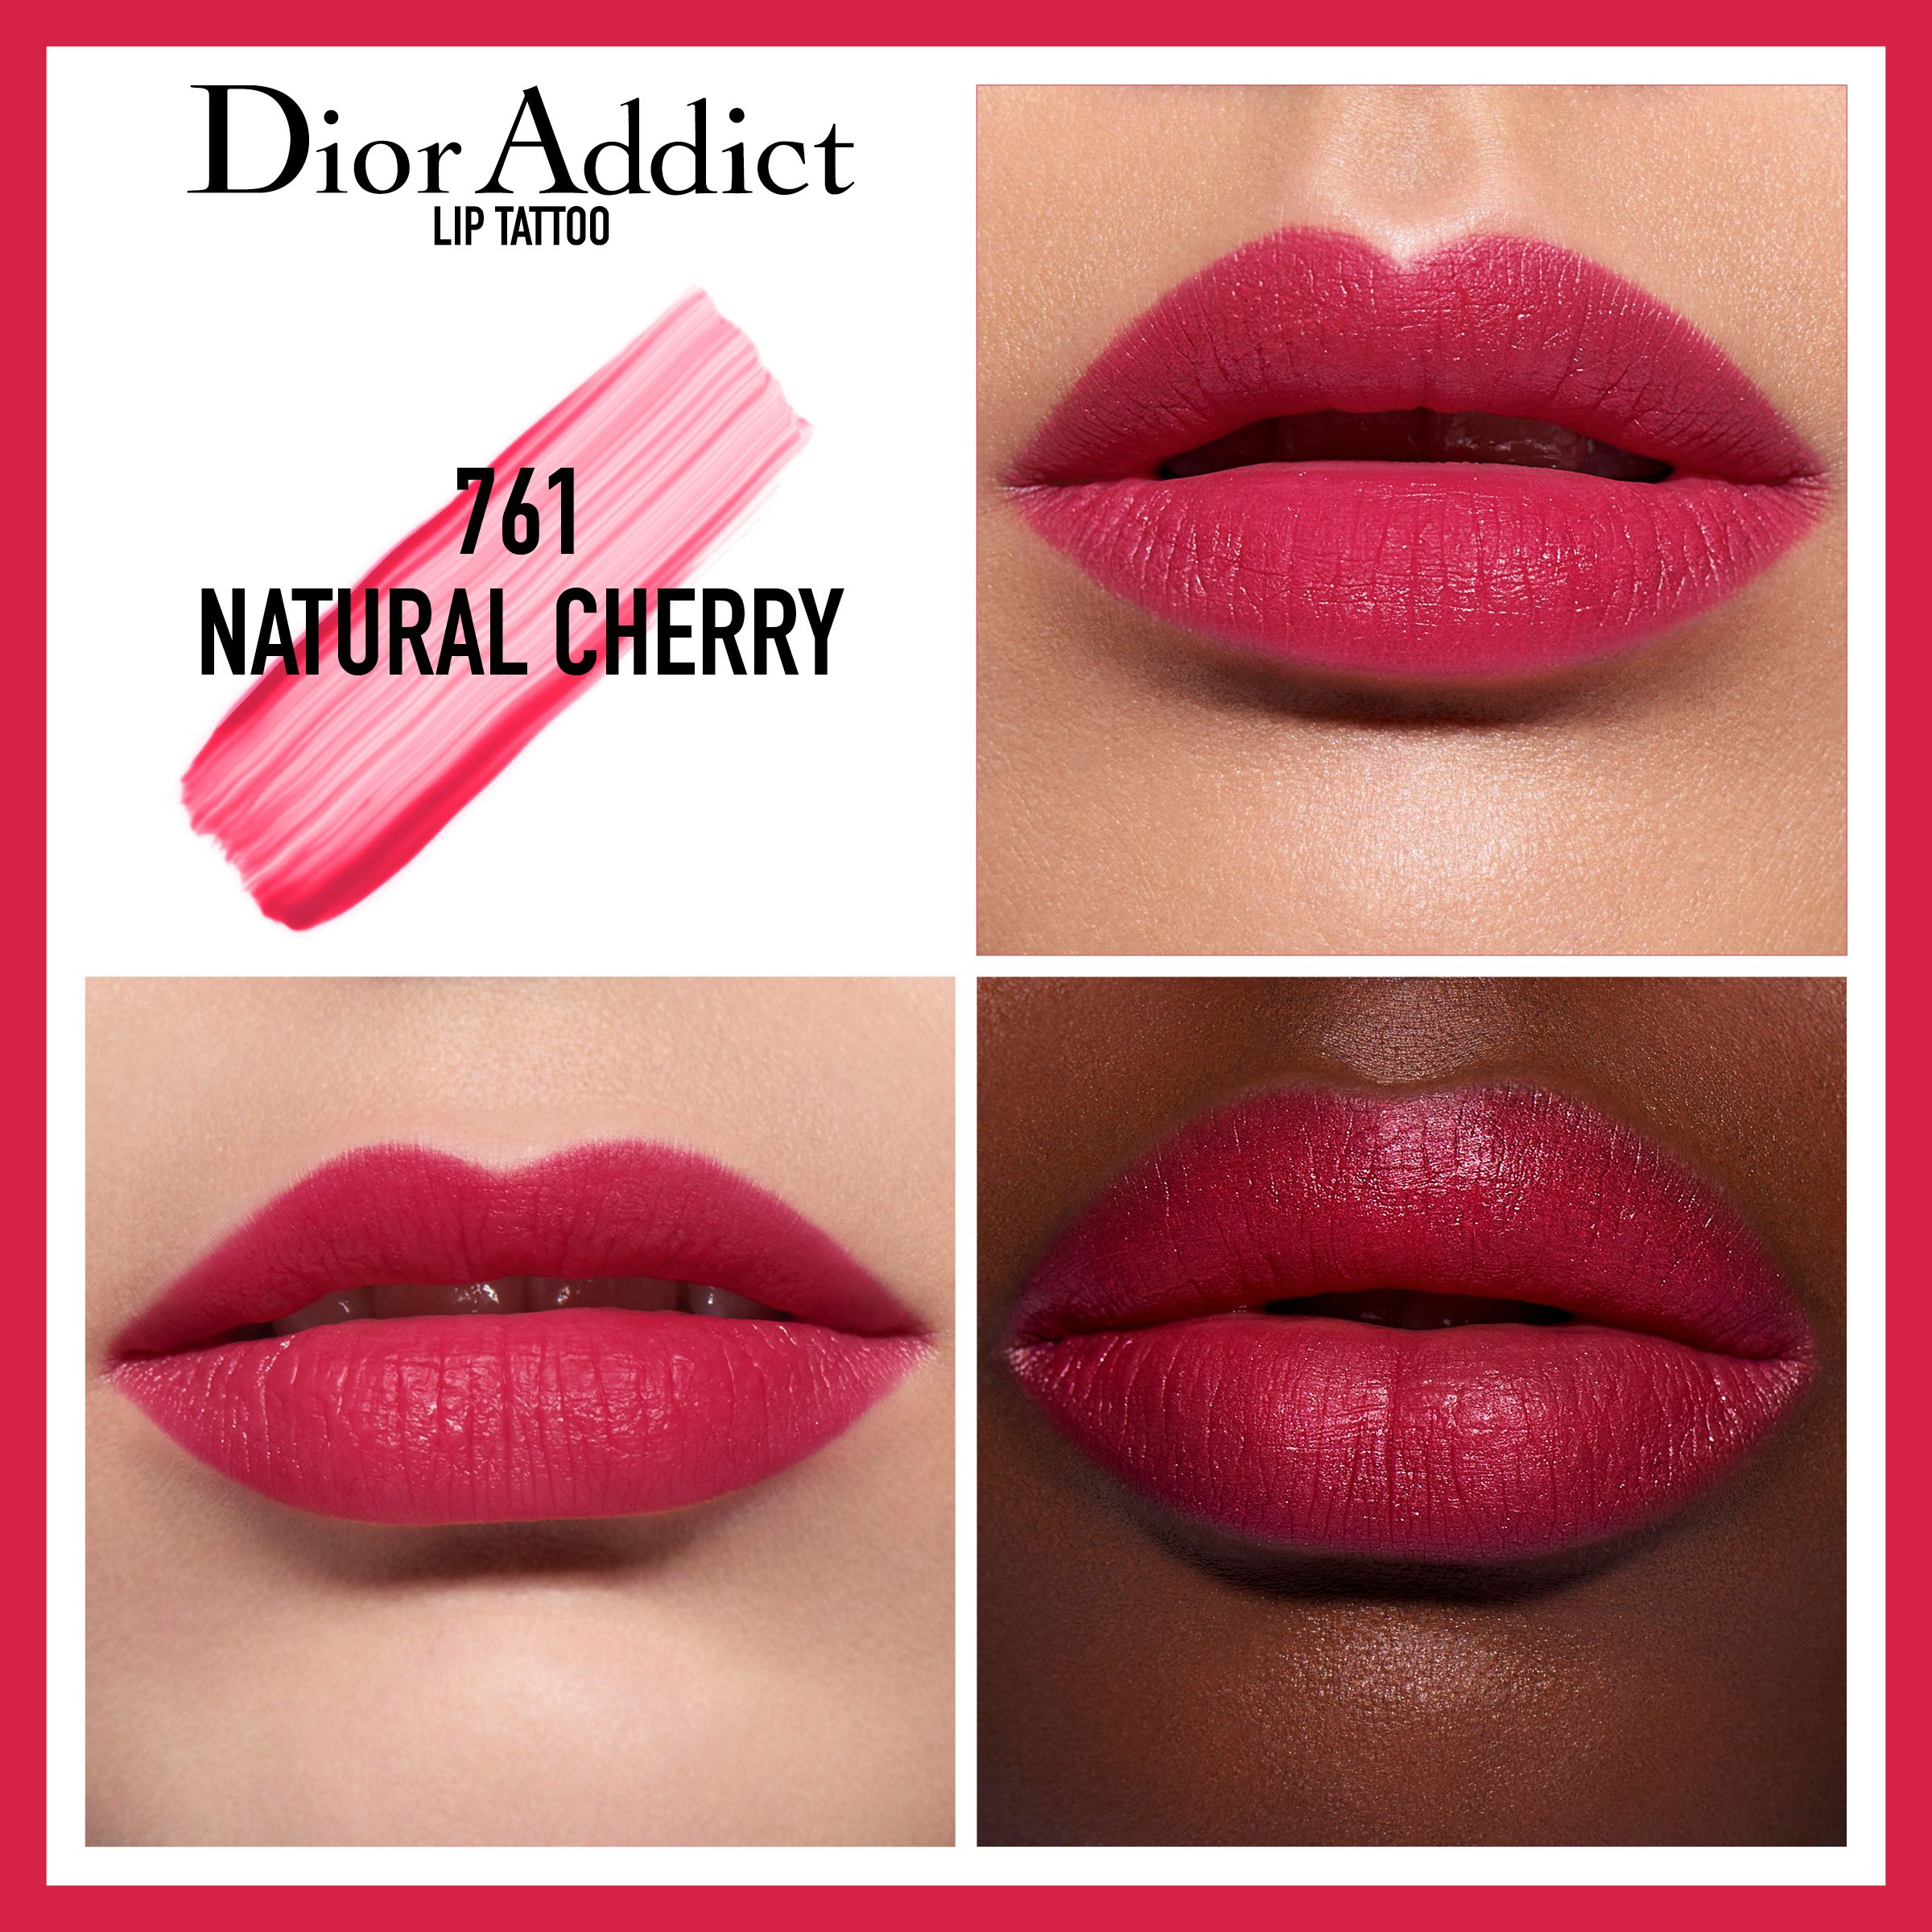 natural cherry dior lip tattoo